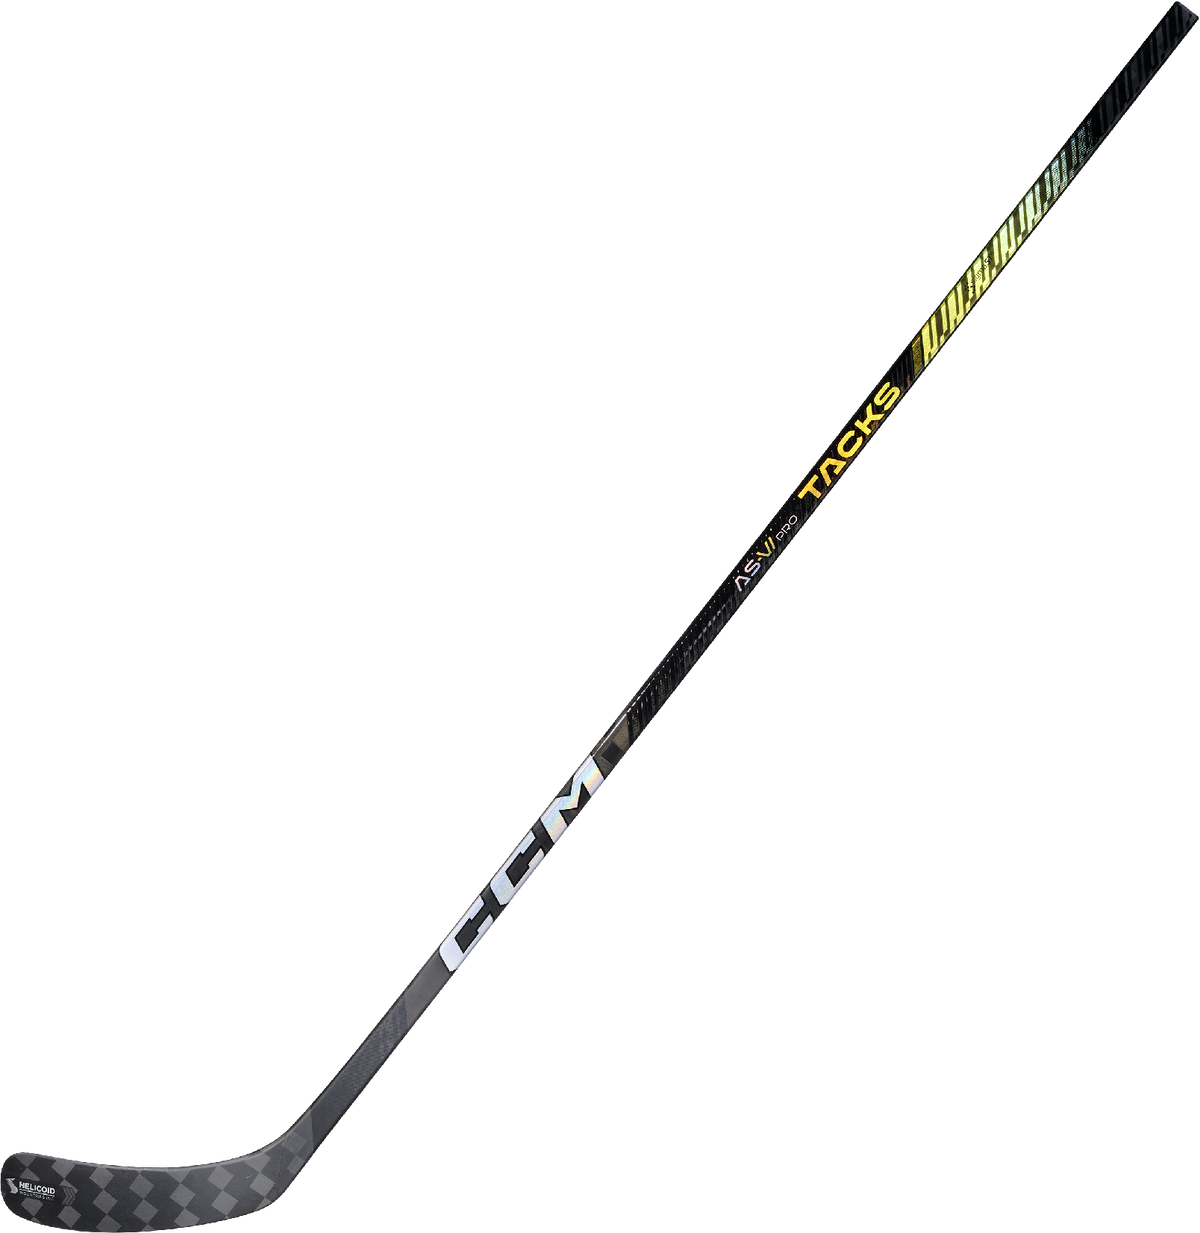 CCM Tacks AS6 Pro Junior Hockey Stick